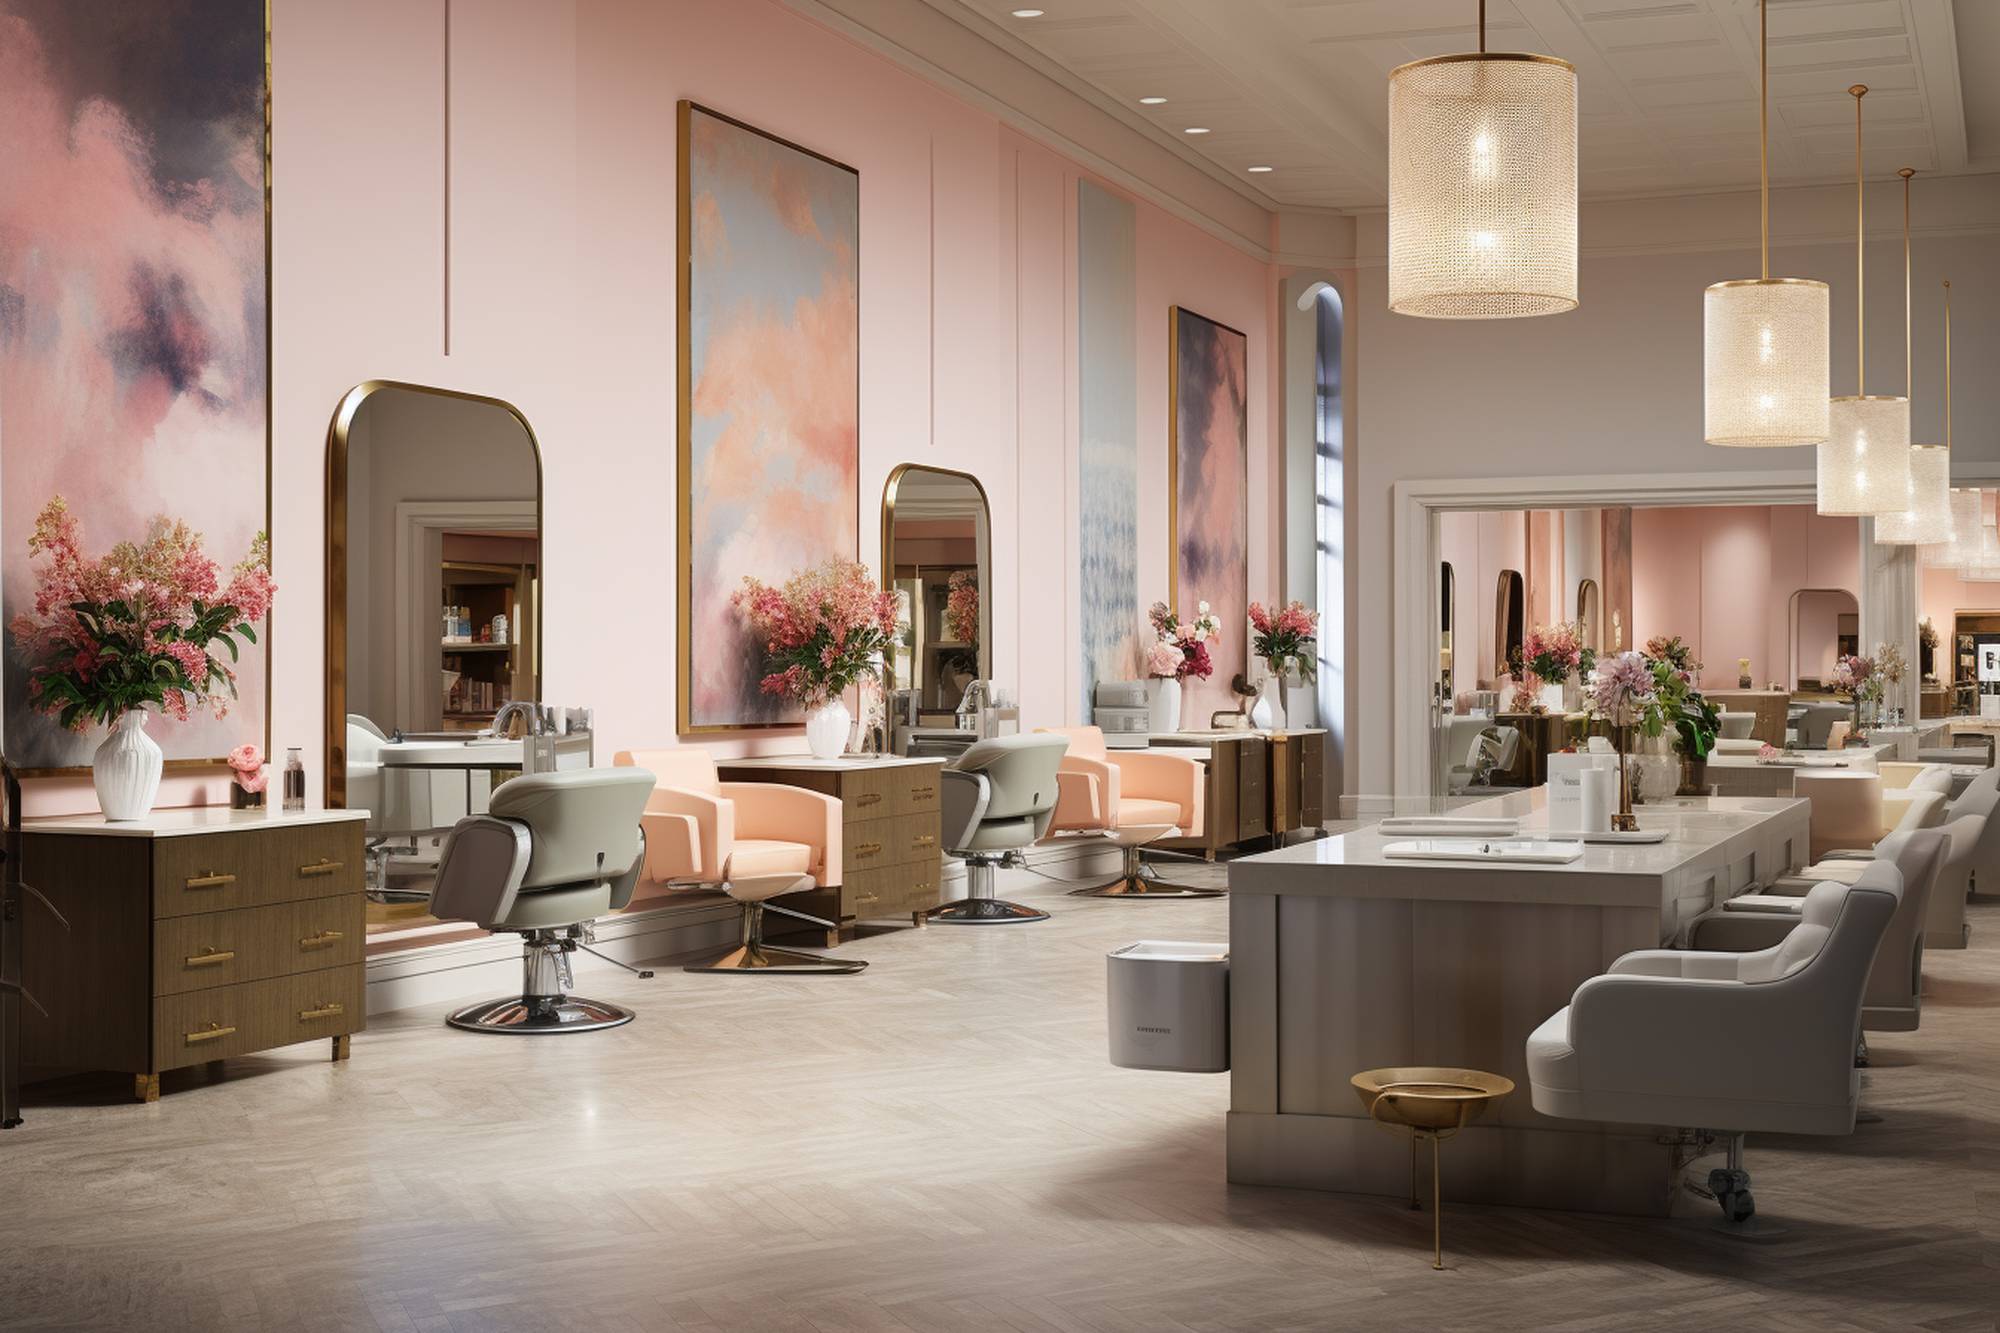 AI art image of a beauty salon by Pixel Gallery